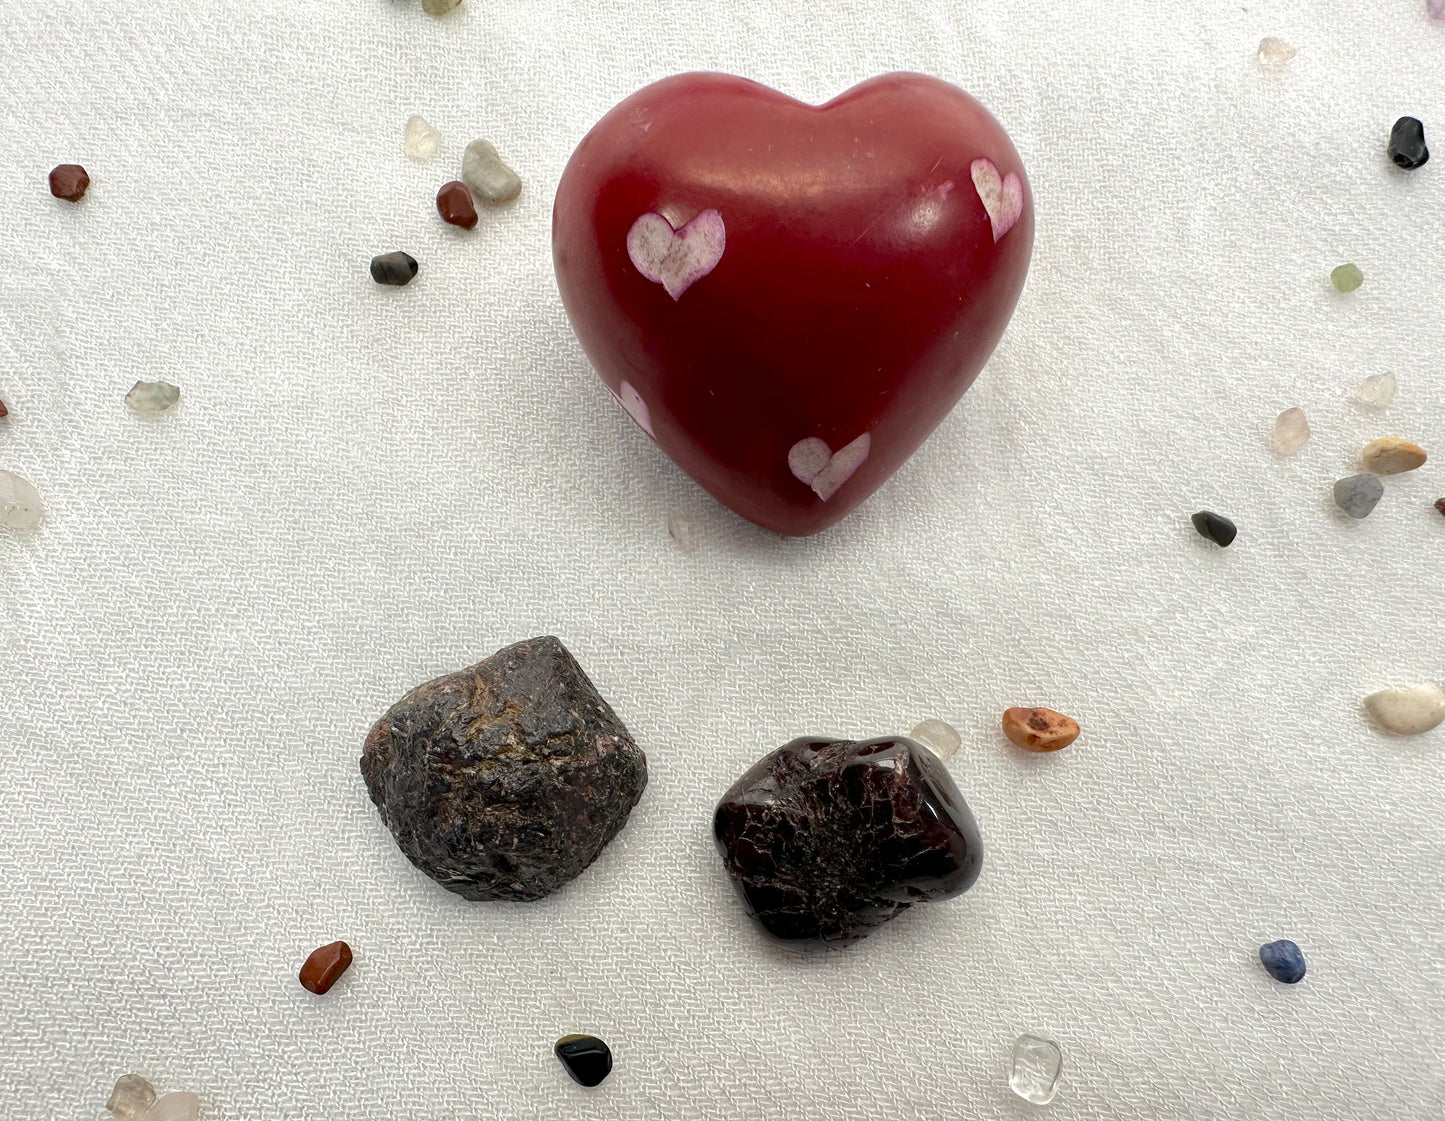 LOVE CELEBRATIONS: Romance, Romantic Love 2-piece set: Garnet and Soapstone Heart